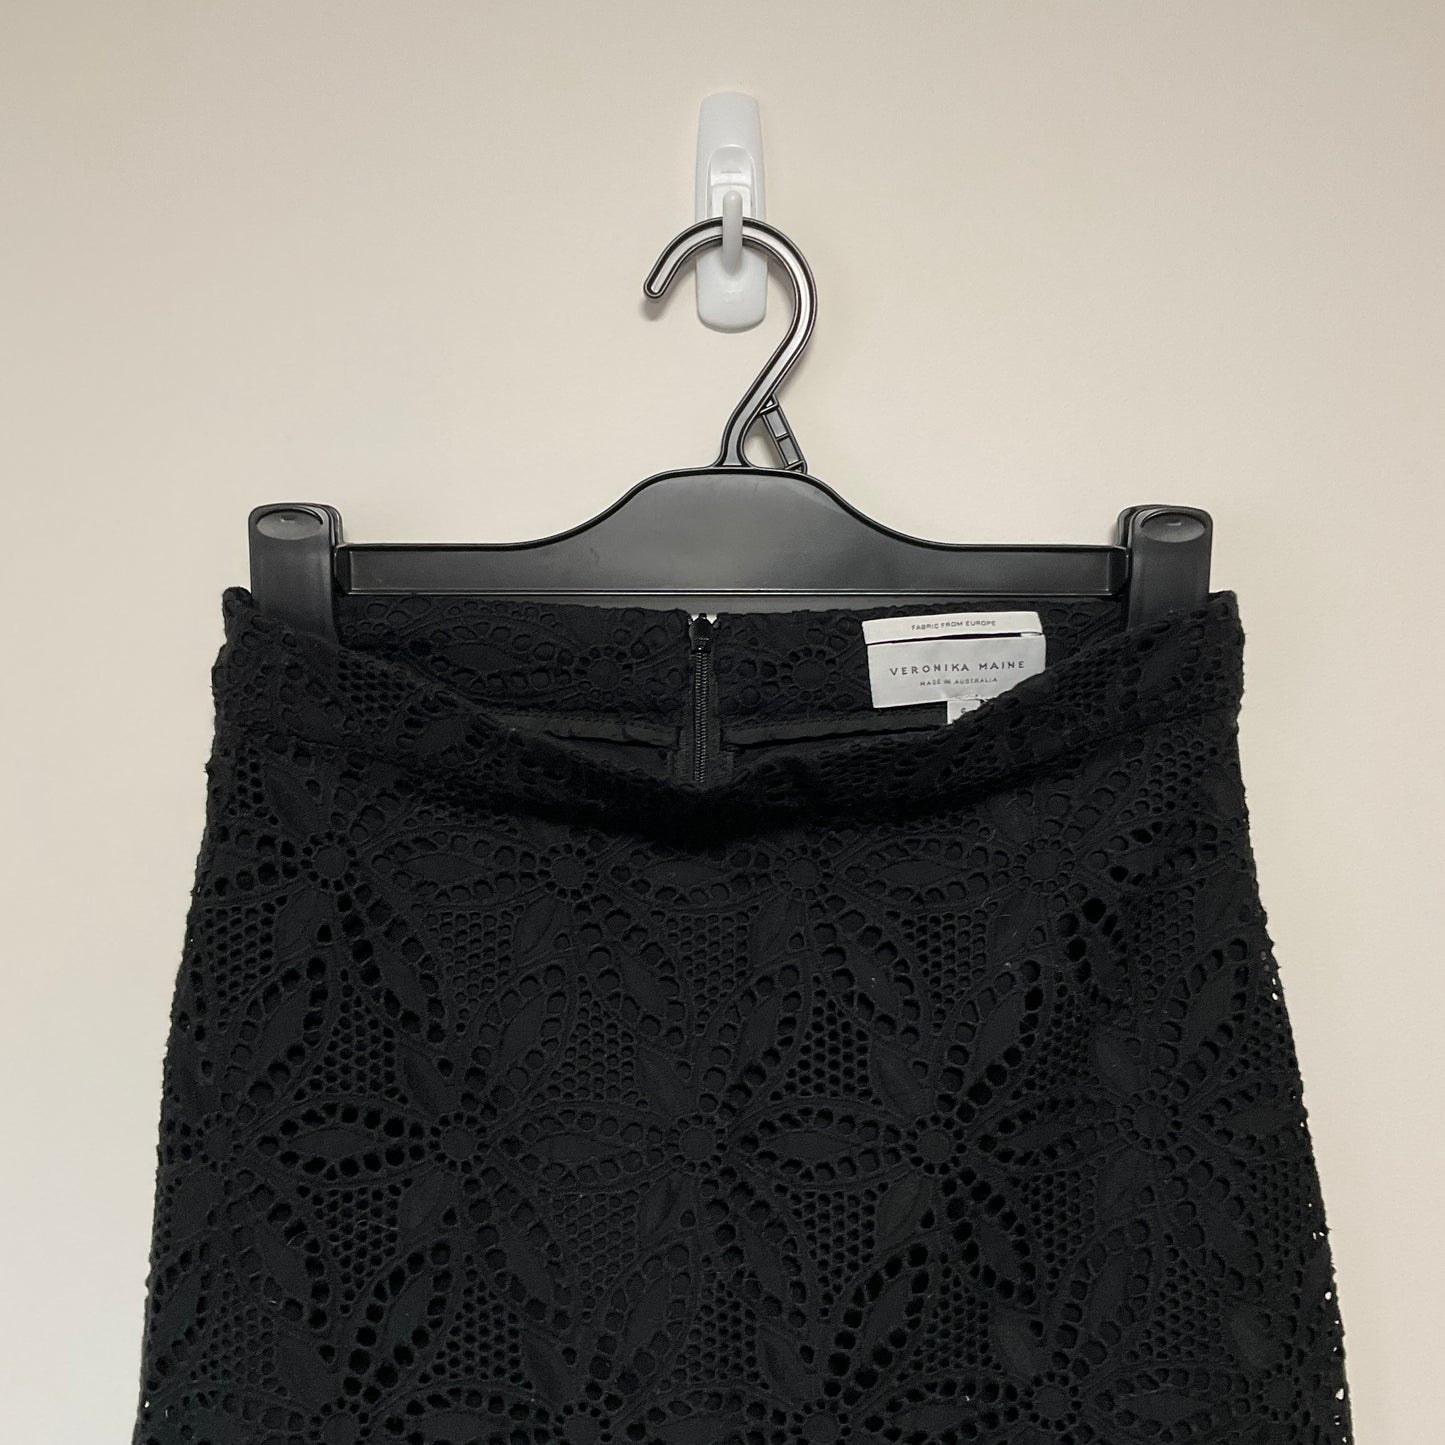 Veronika Maine - Lace Midi Skirt